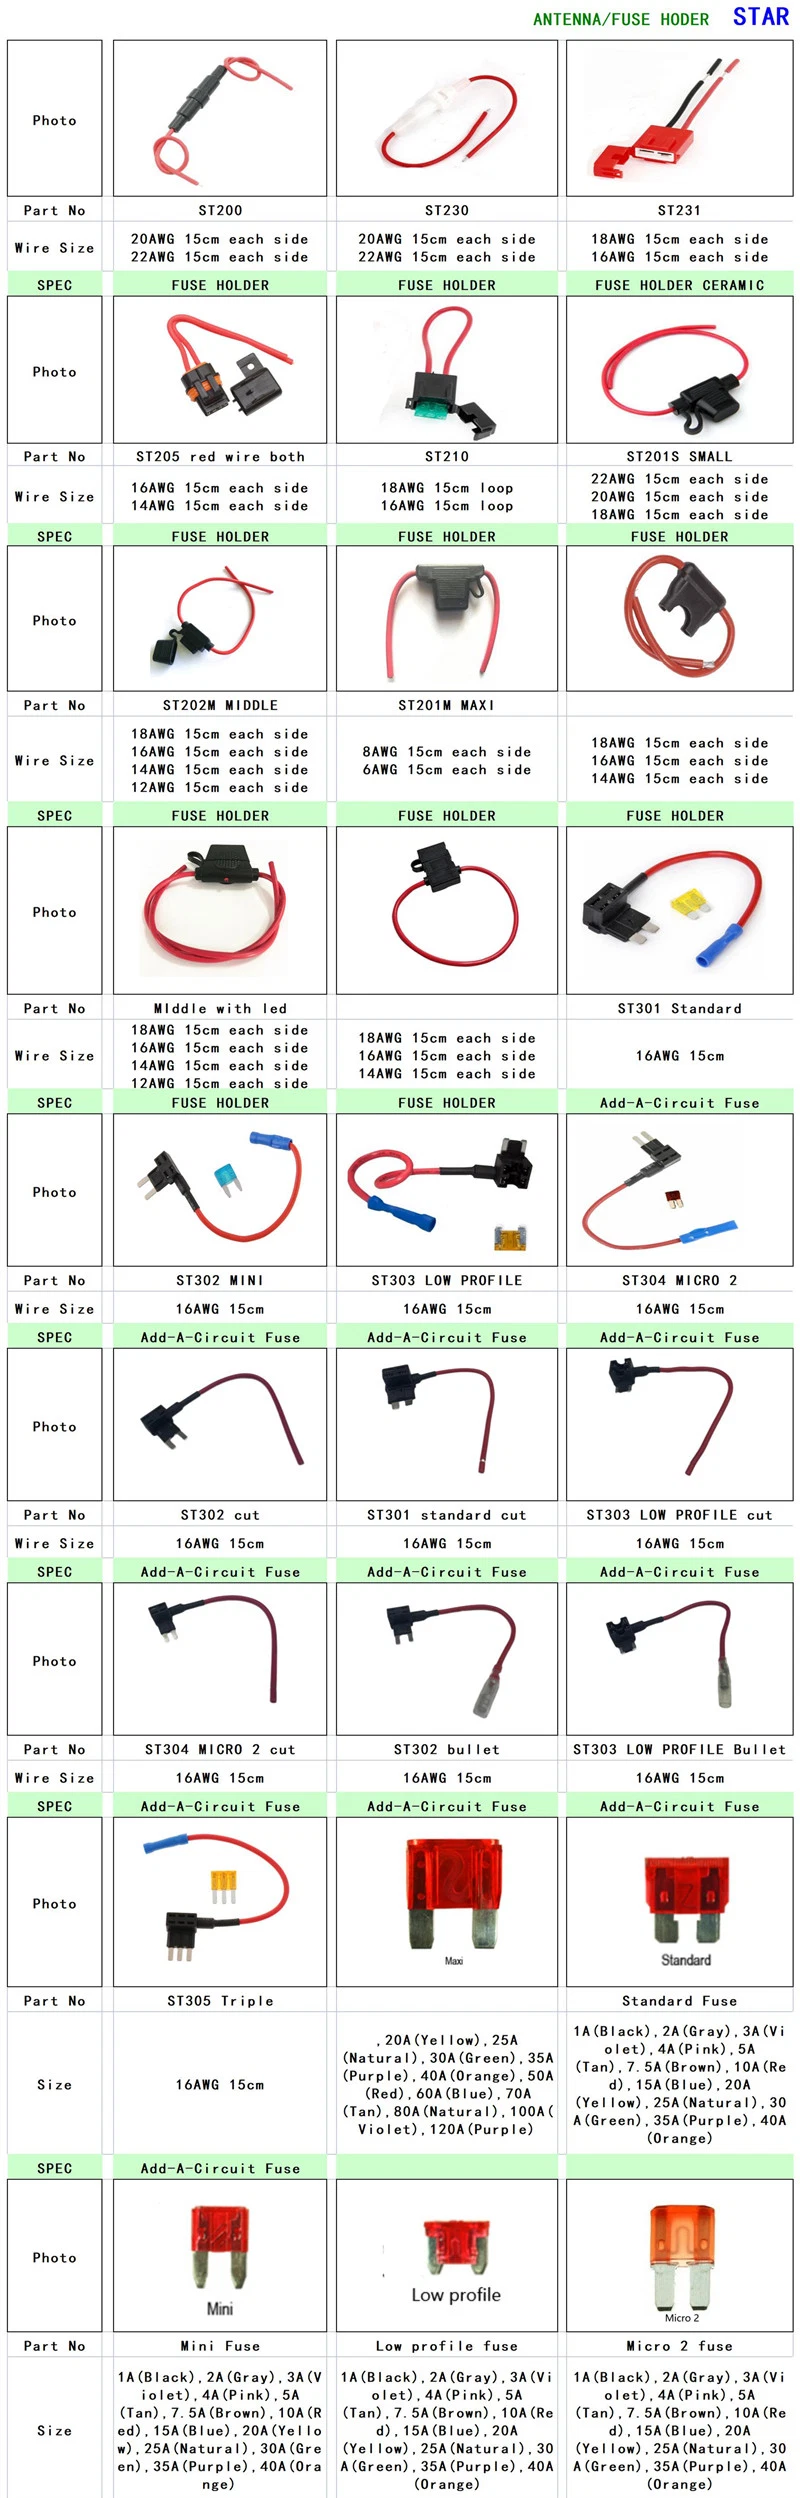 Auto Car 2-Wire Electric Headlight H11 Socket Harness Plastic Connector Plug